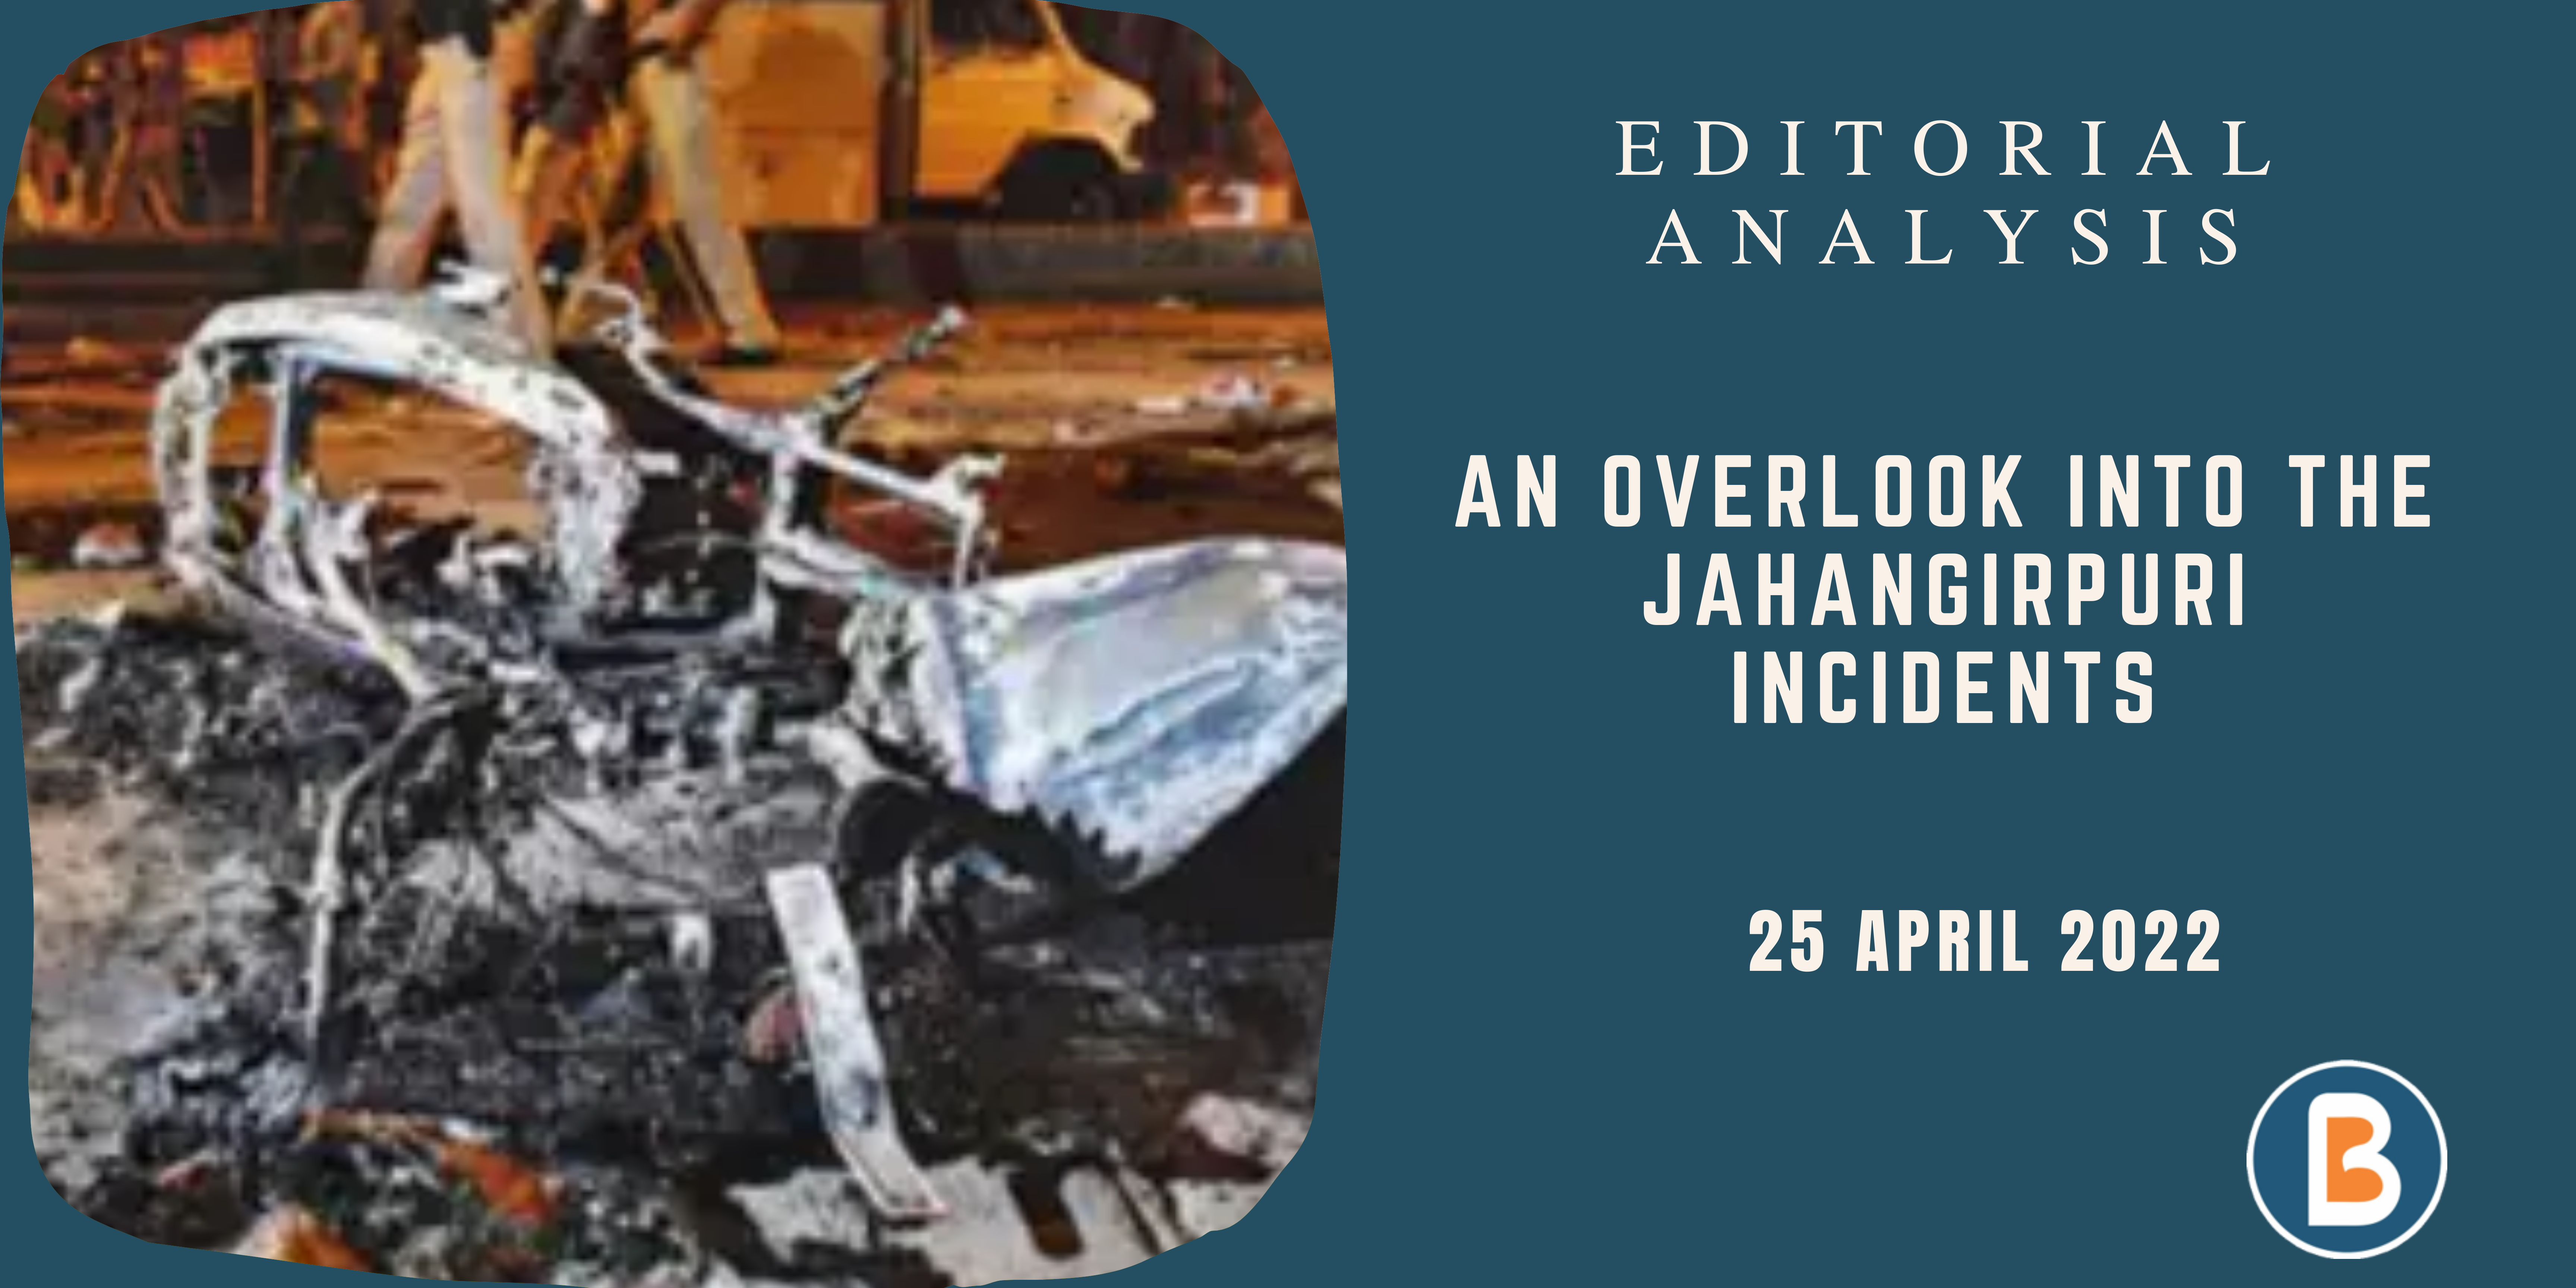 Editorial Analysis for IAS - An Overlook into the Jahangirpuri Incidents